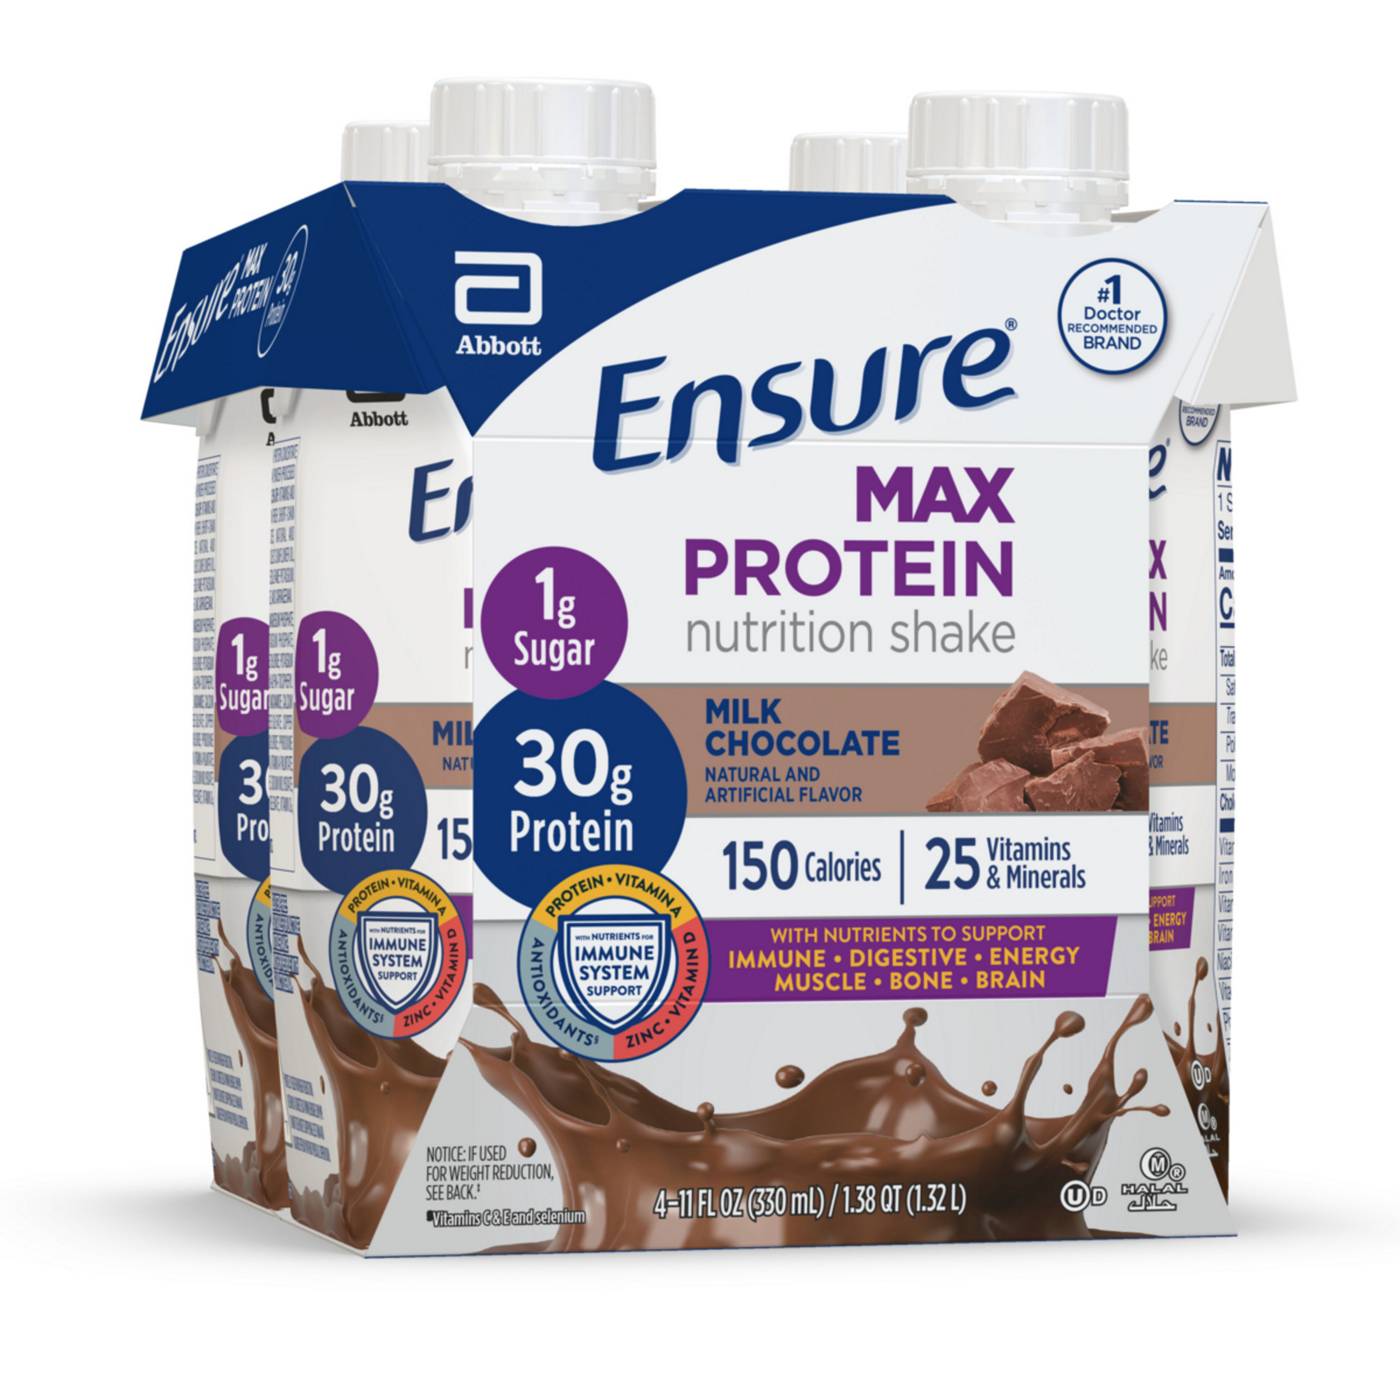 Ensure Max Protein Nutrition Shake Milk Chocolate; image 2 of 13